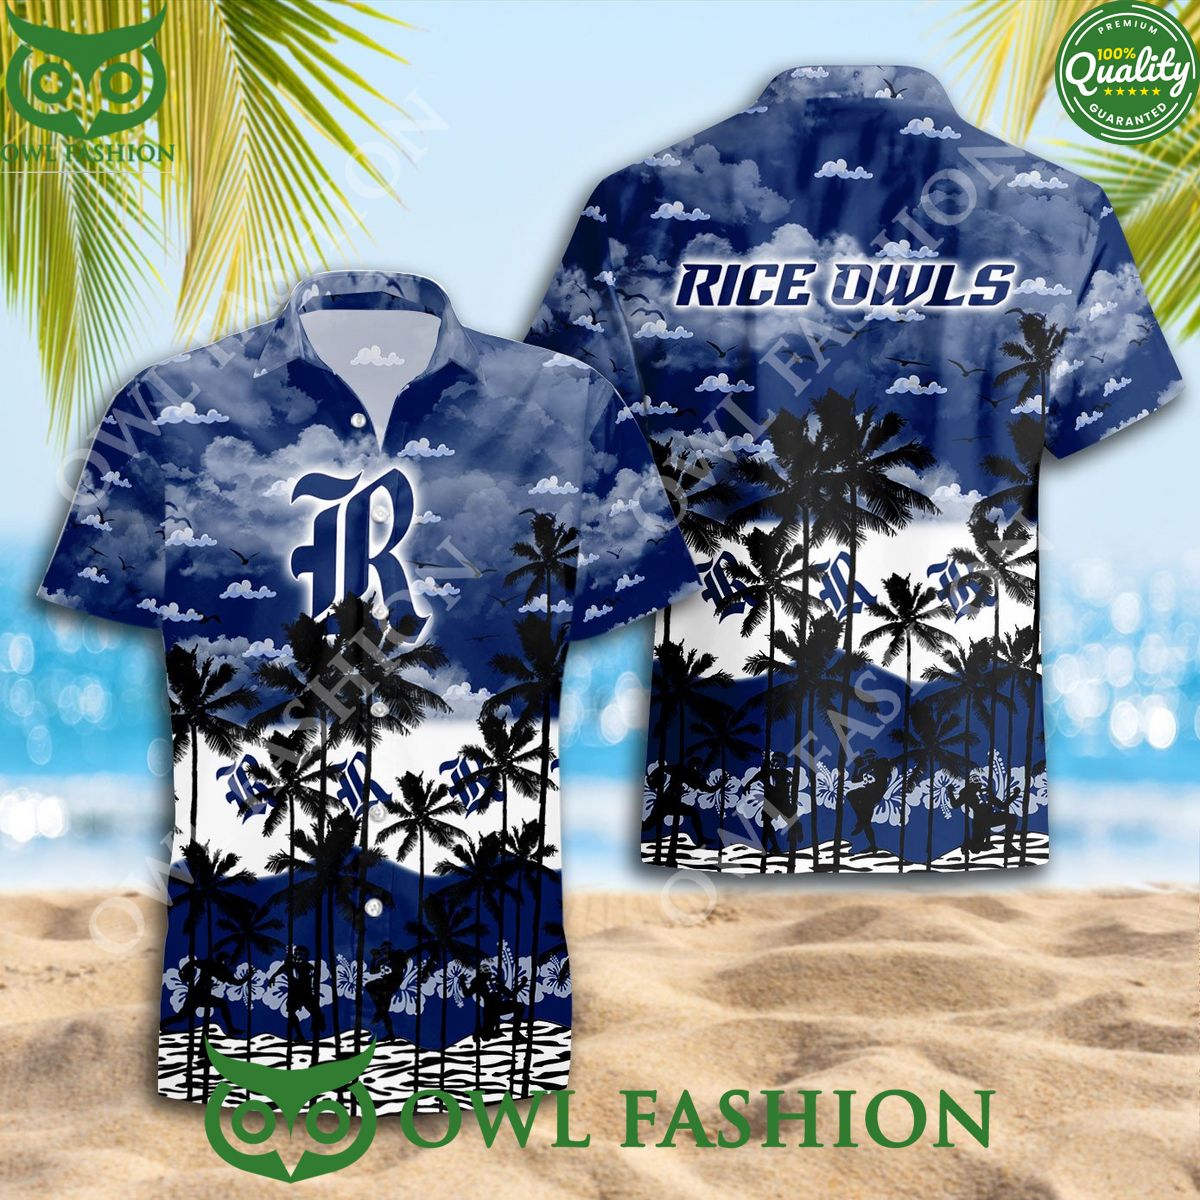 rice owls hawaiian shirt trending summer fan designed 1 w4fef.jpg